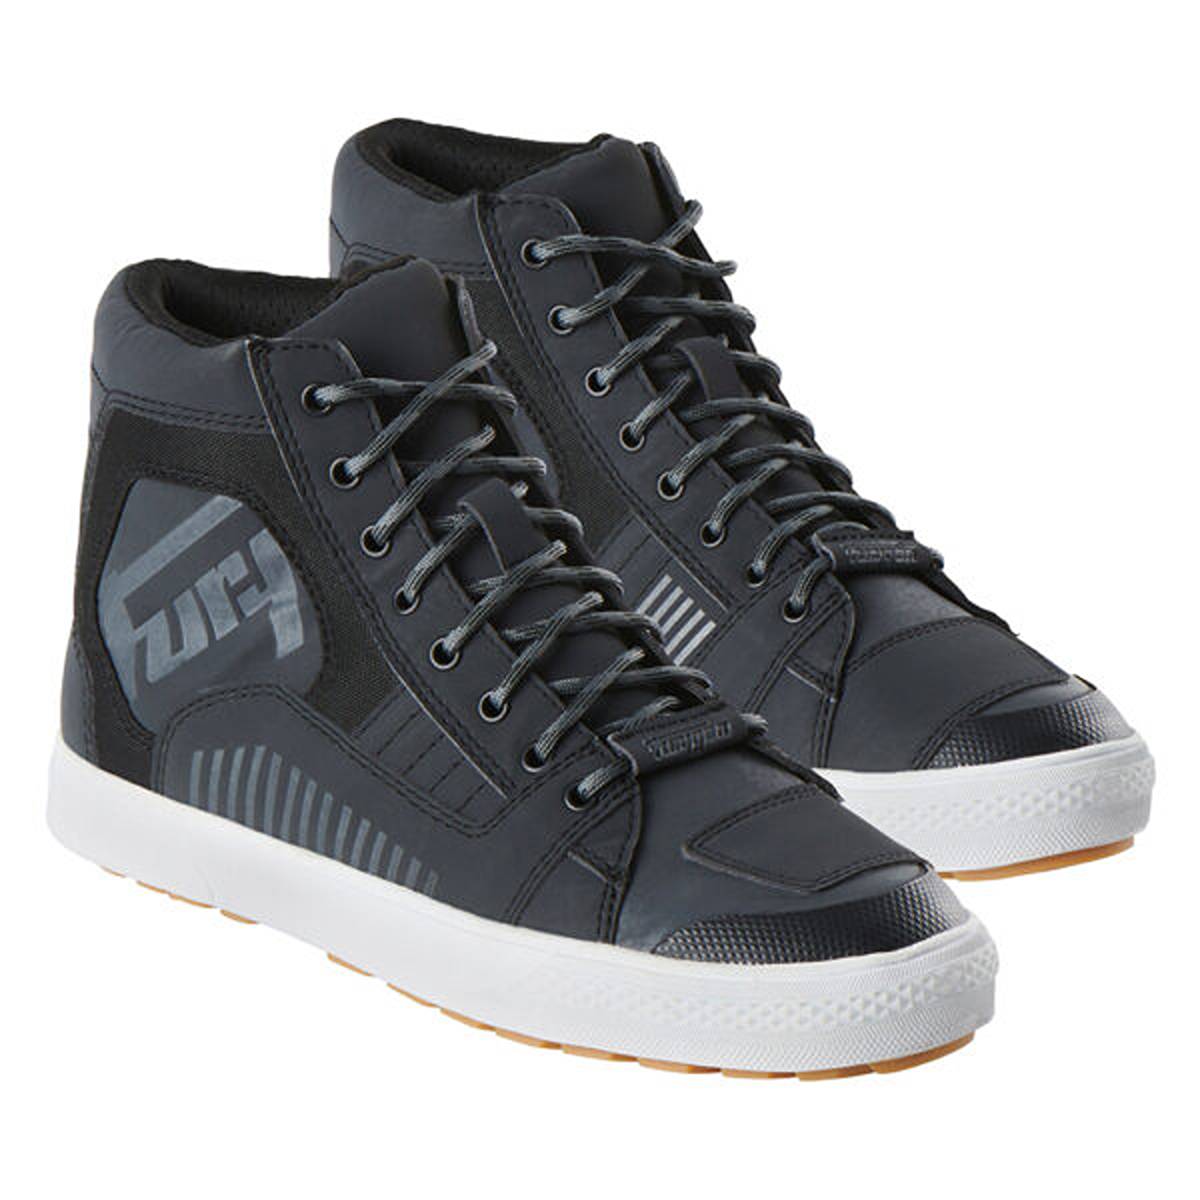 Image of Furygan Sacramento D30 Shoes Black Size 45 ID 3435980368302